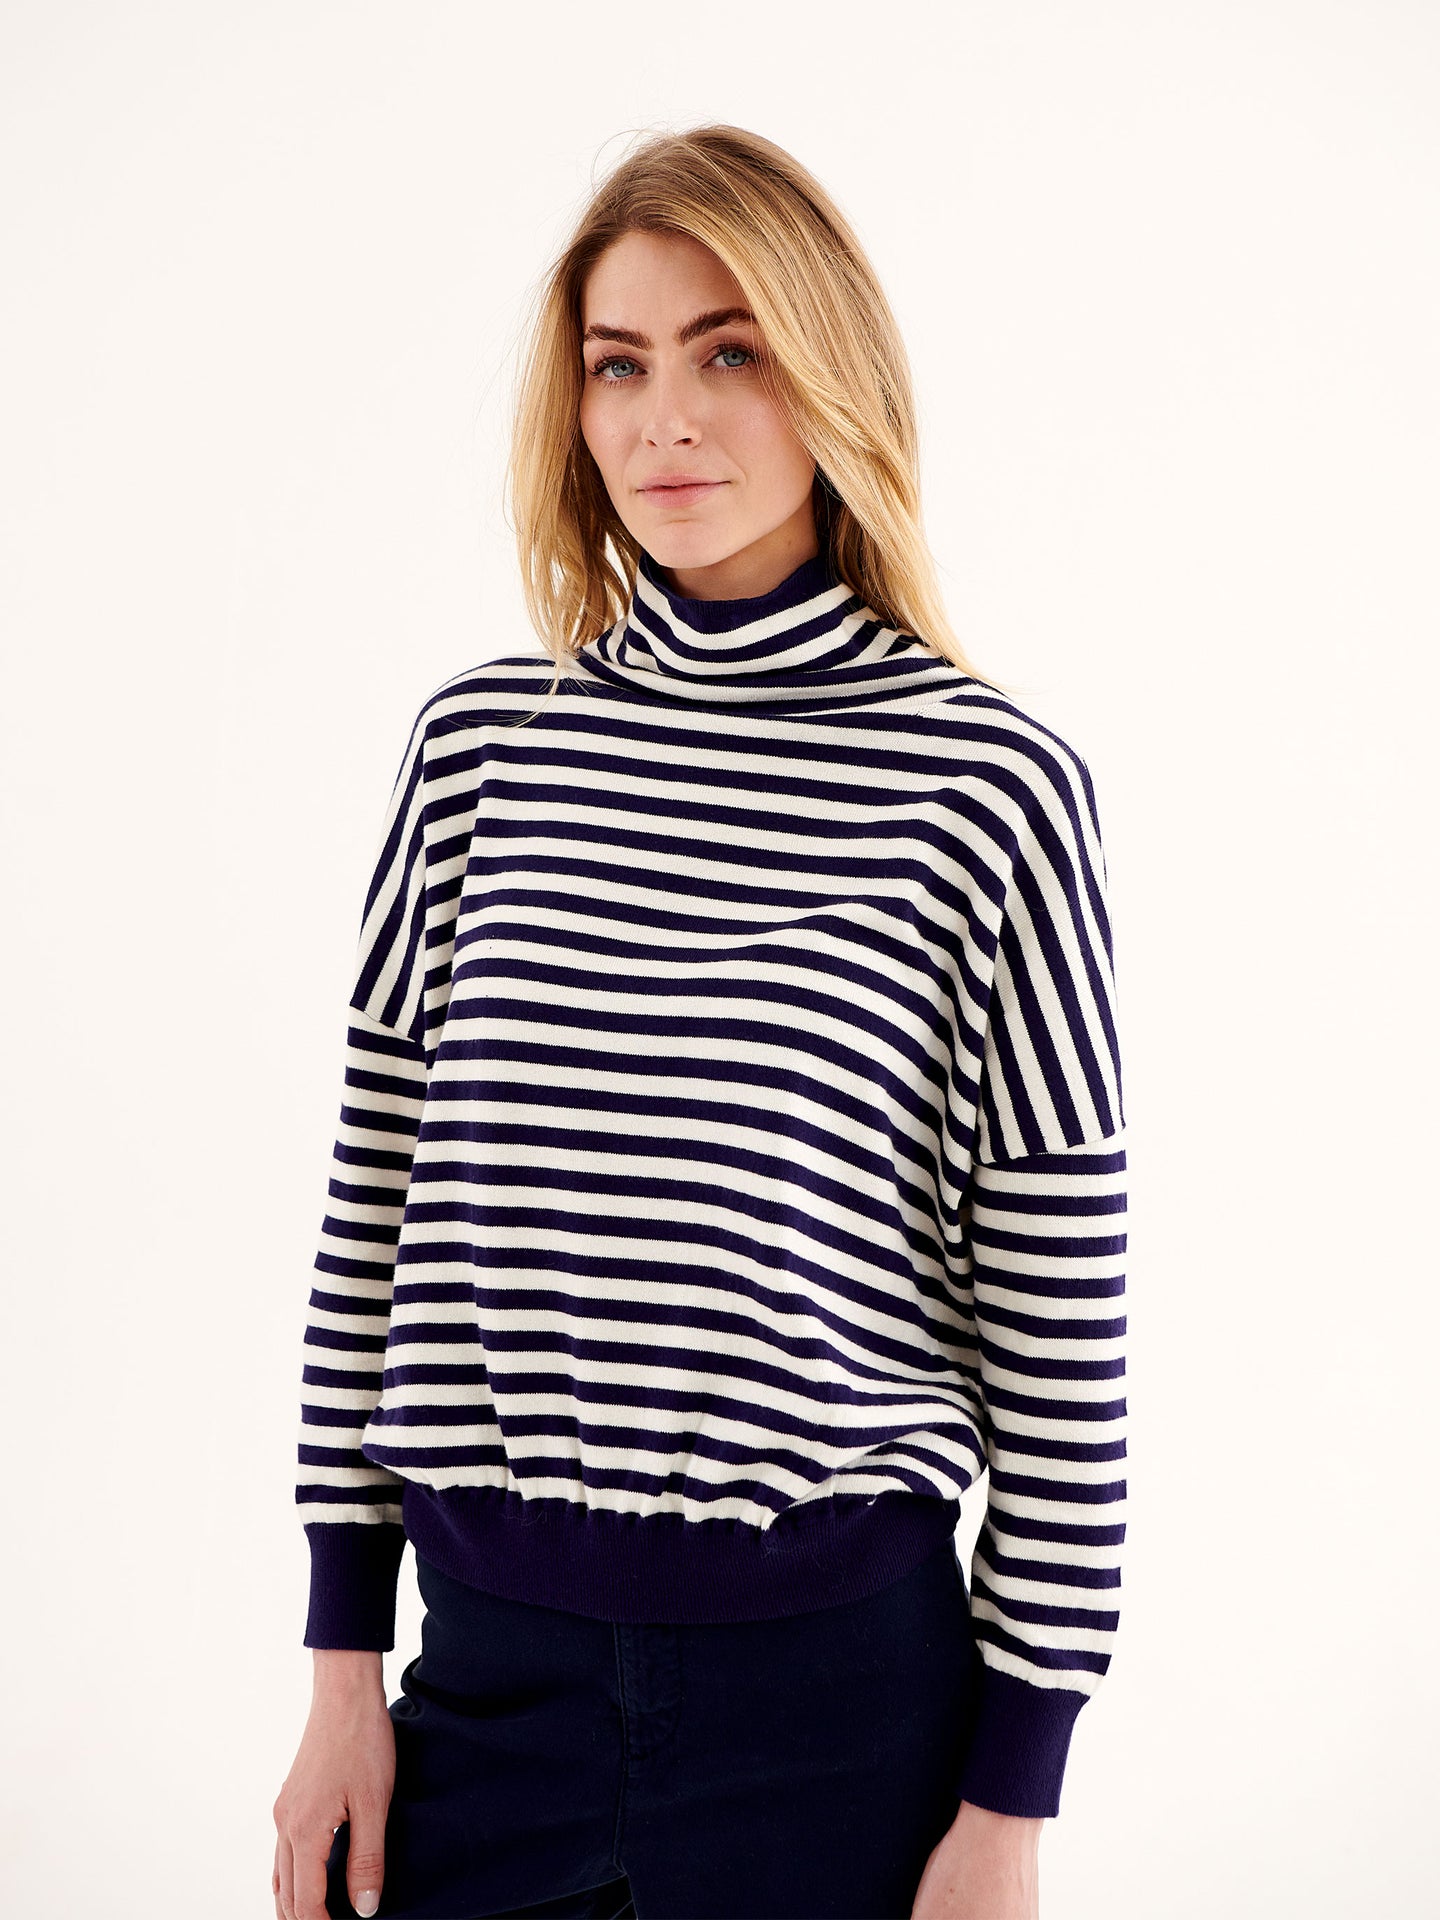 Jayne funnel neck tunic stripe sweater - Navy & White